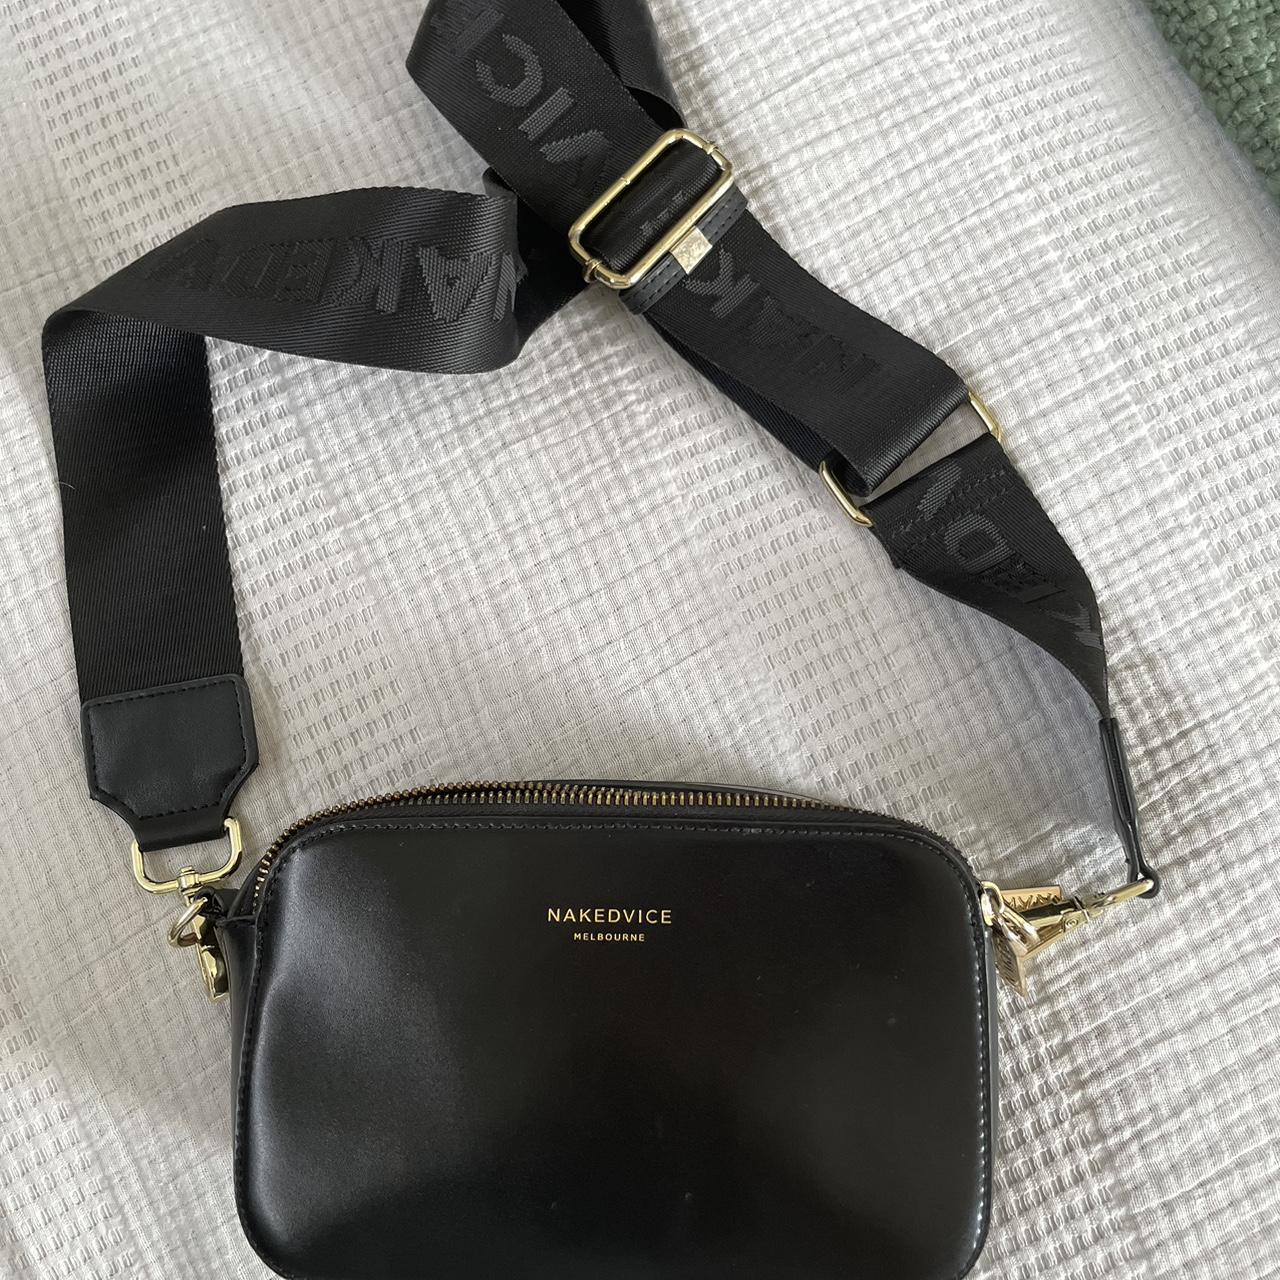 NAKEDVICE original bag Gold accessories and black... - Depop